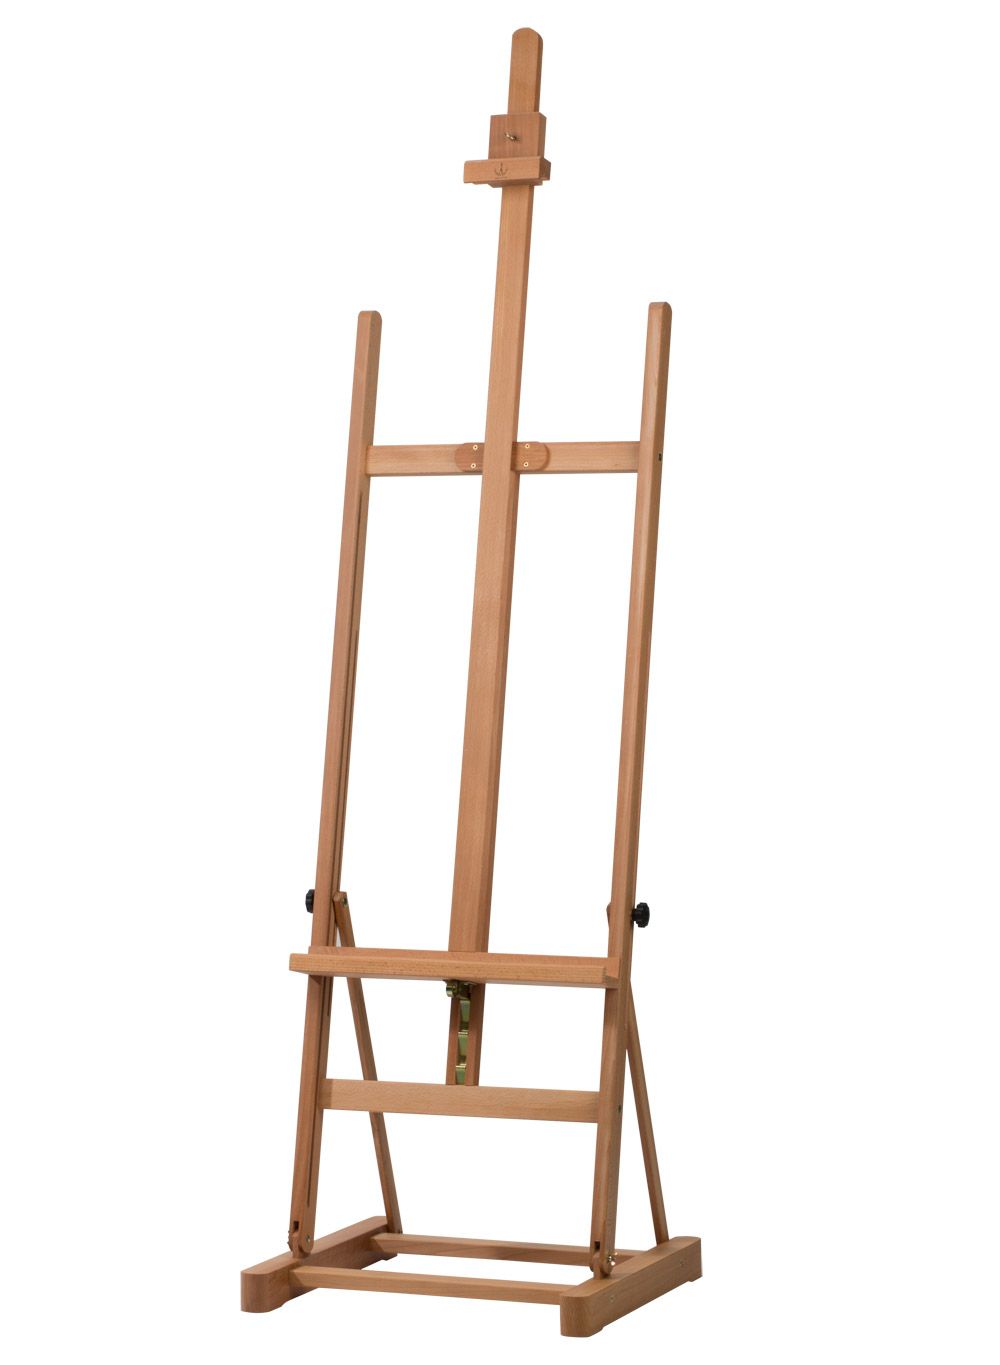 Portable Wood H-Frame Art Sketch Painting Easel Adjustable Frame Drawing  Stand